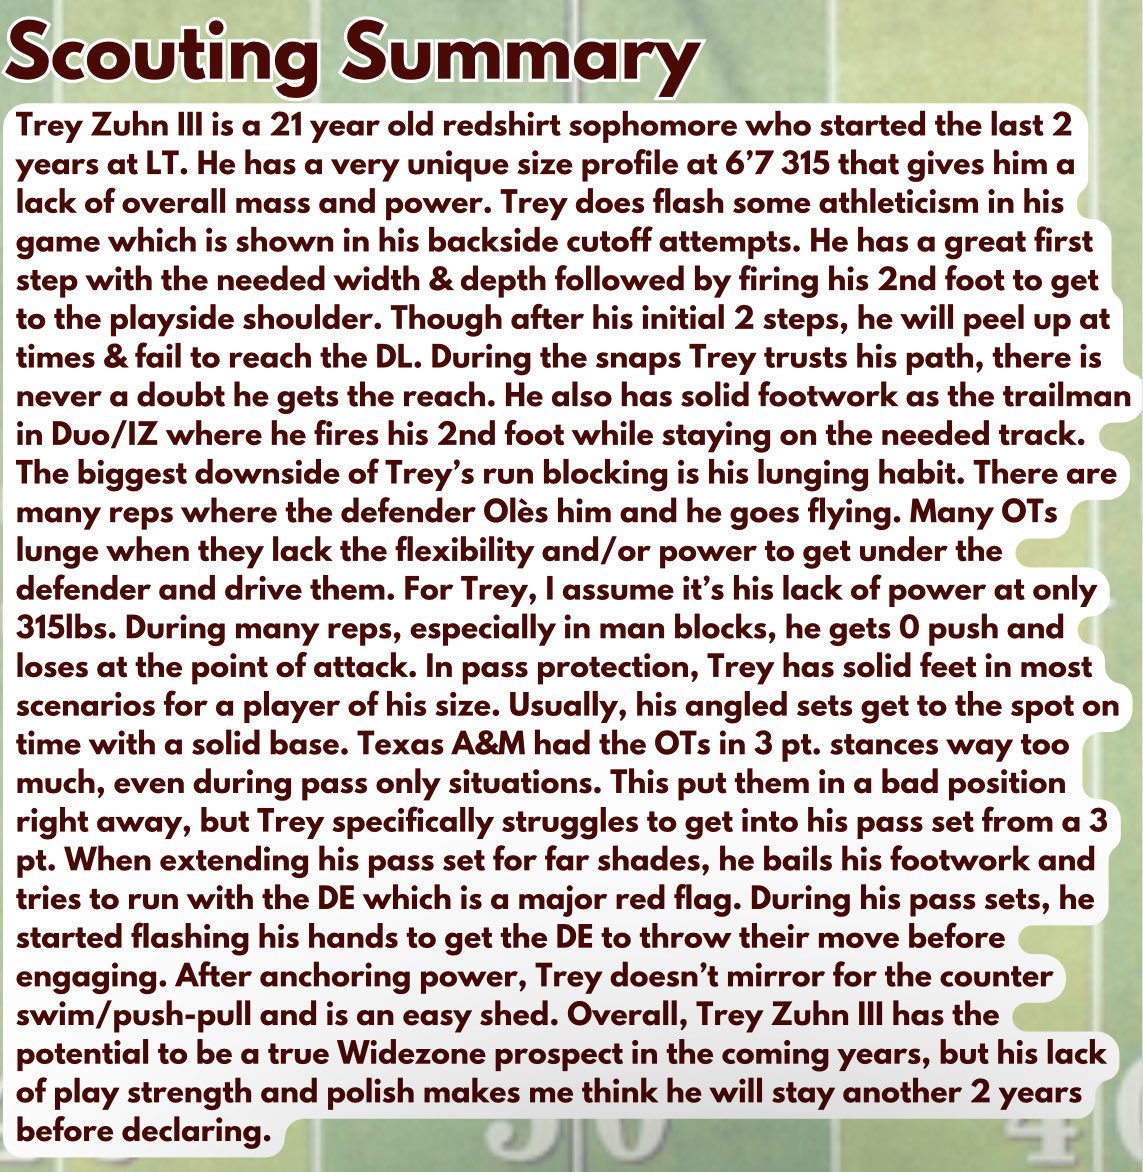 Summer Scouting Report on Trey Zuhn III
#NFL #NFLDraft